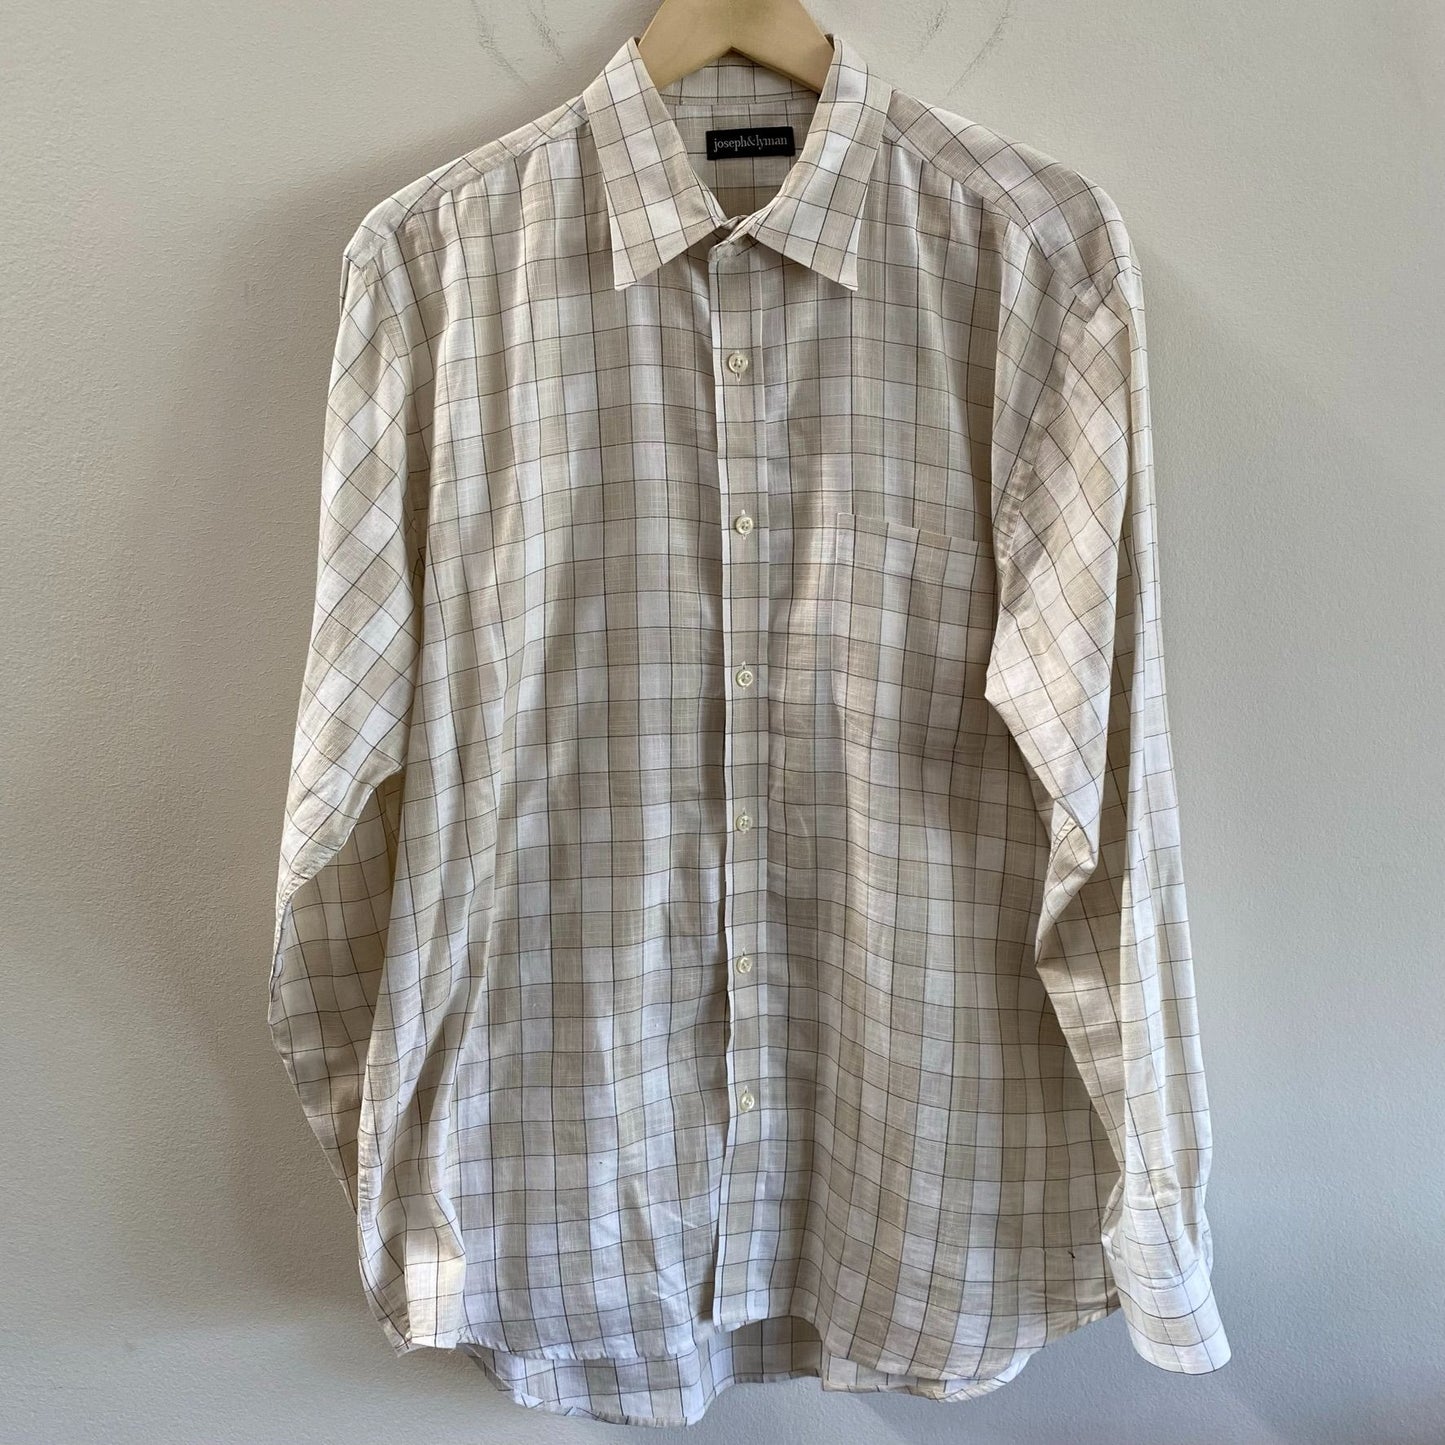 Joseph & Lyman Grid L/S Shirt